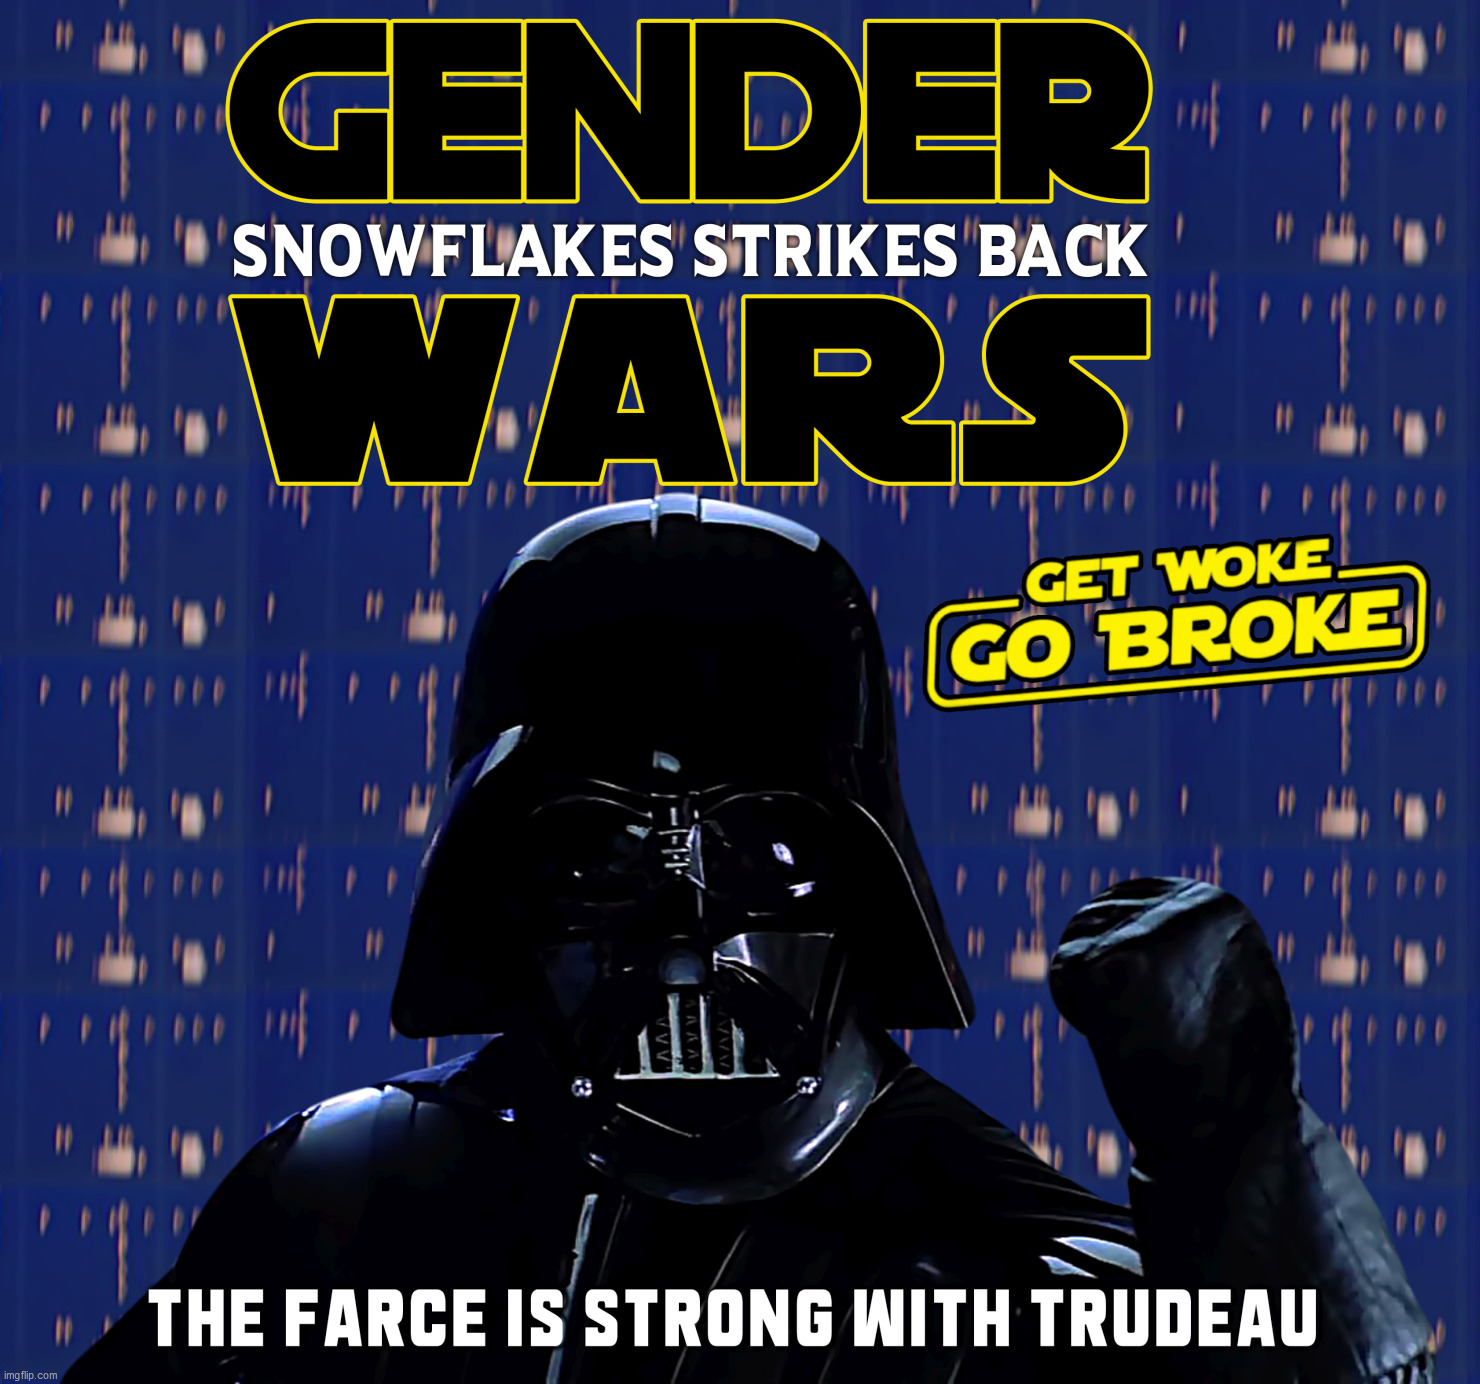 Gender Wars | image tagged in gender wars,snowflakes,the force awakens,star wars,disney killed star wars,darth vader | made w/ Imgflip meme maker